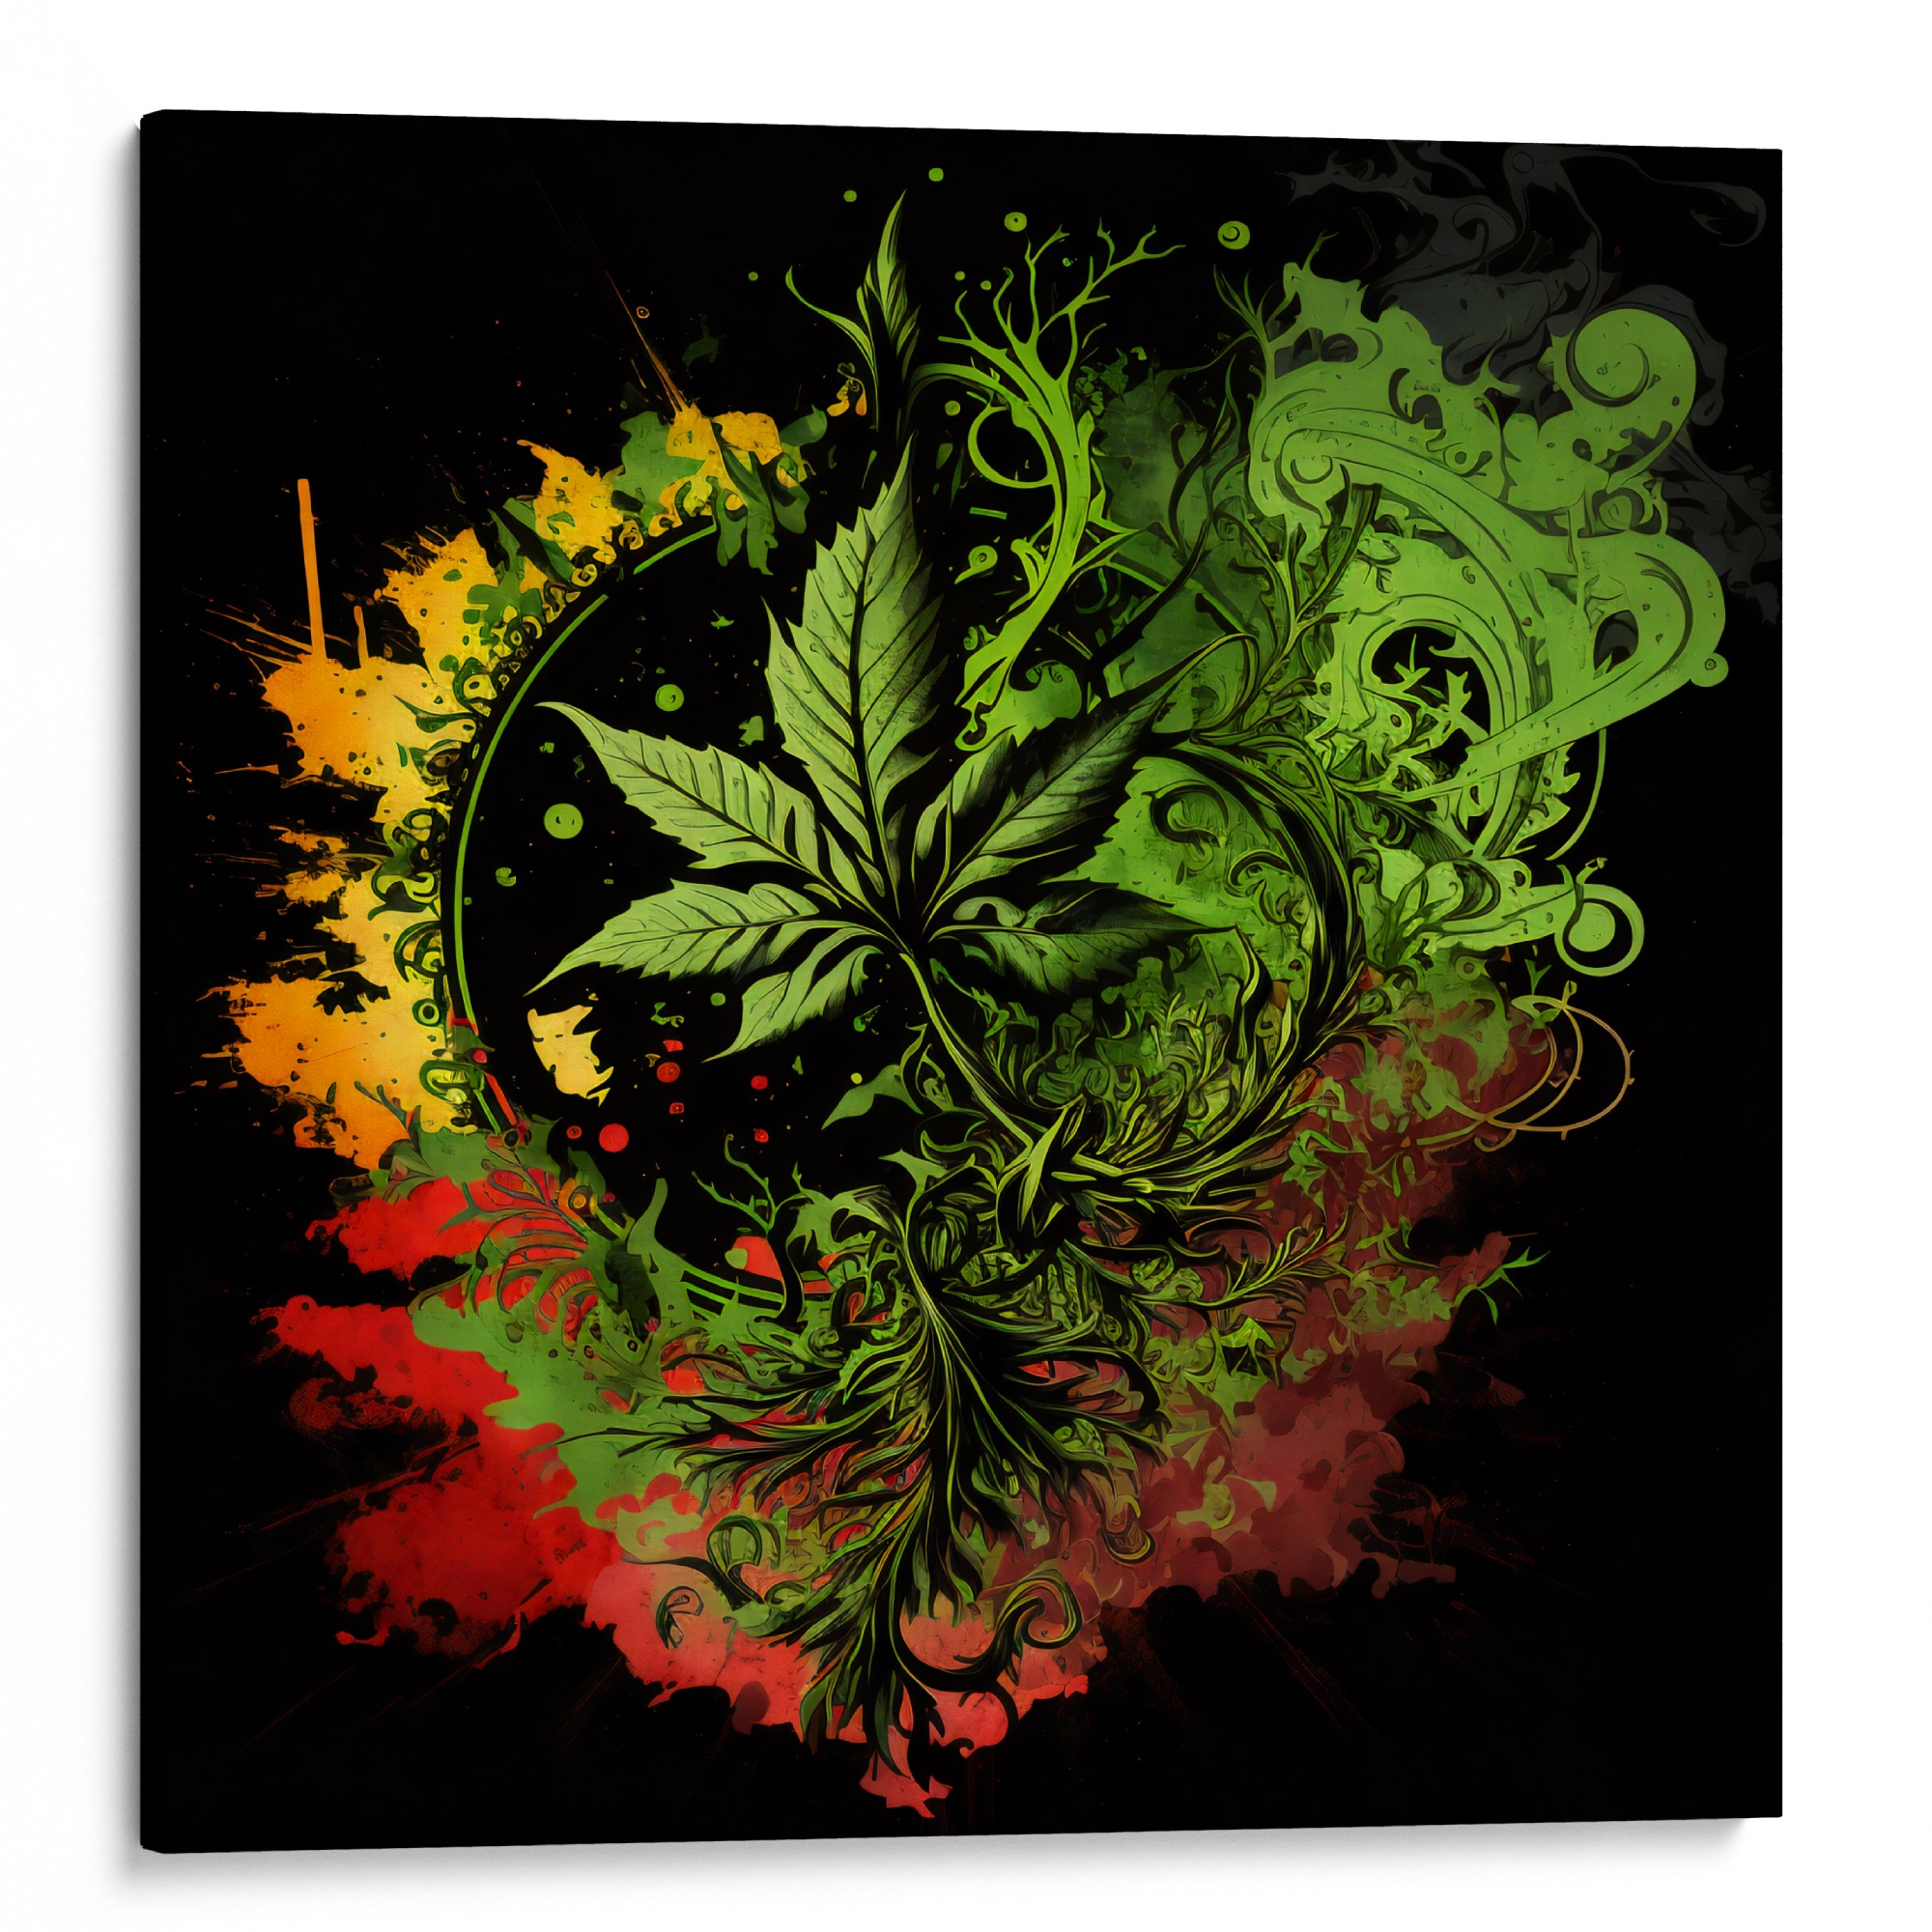 MI YARD MANDALA Art Piece - Chronicles of the herb for art enthusiasts.